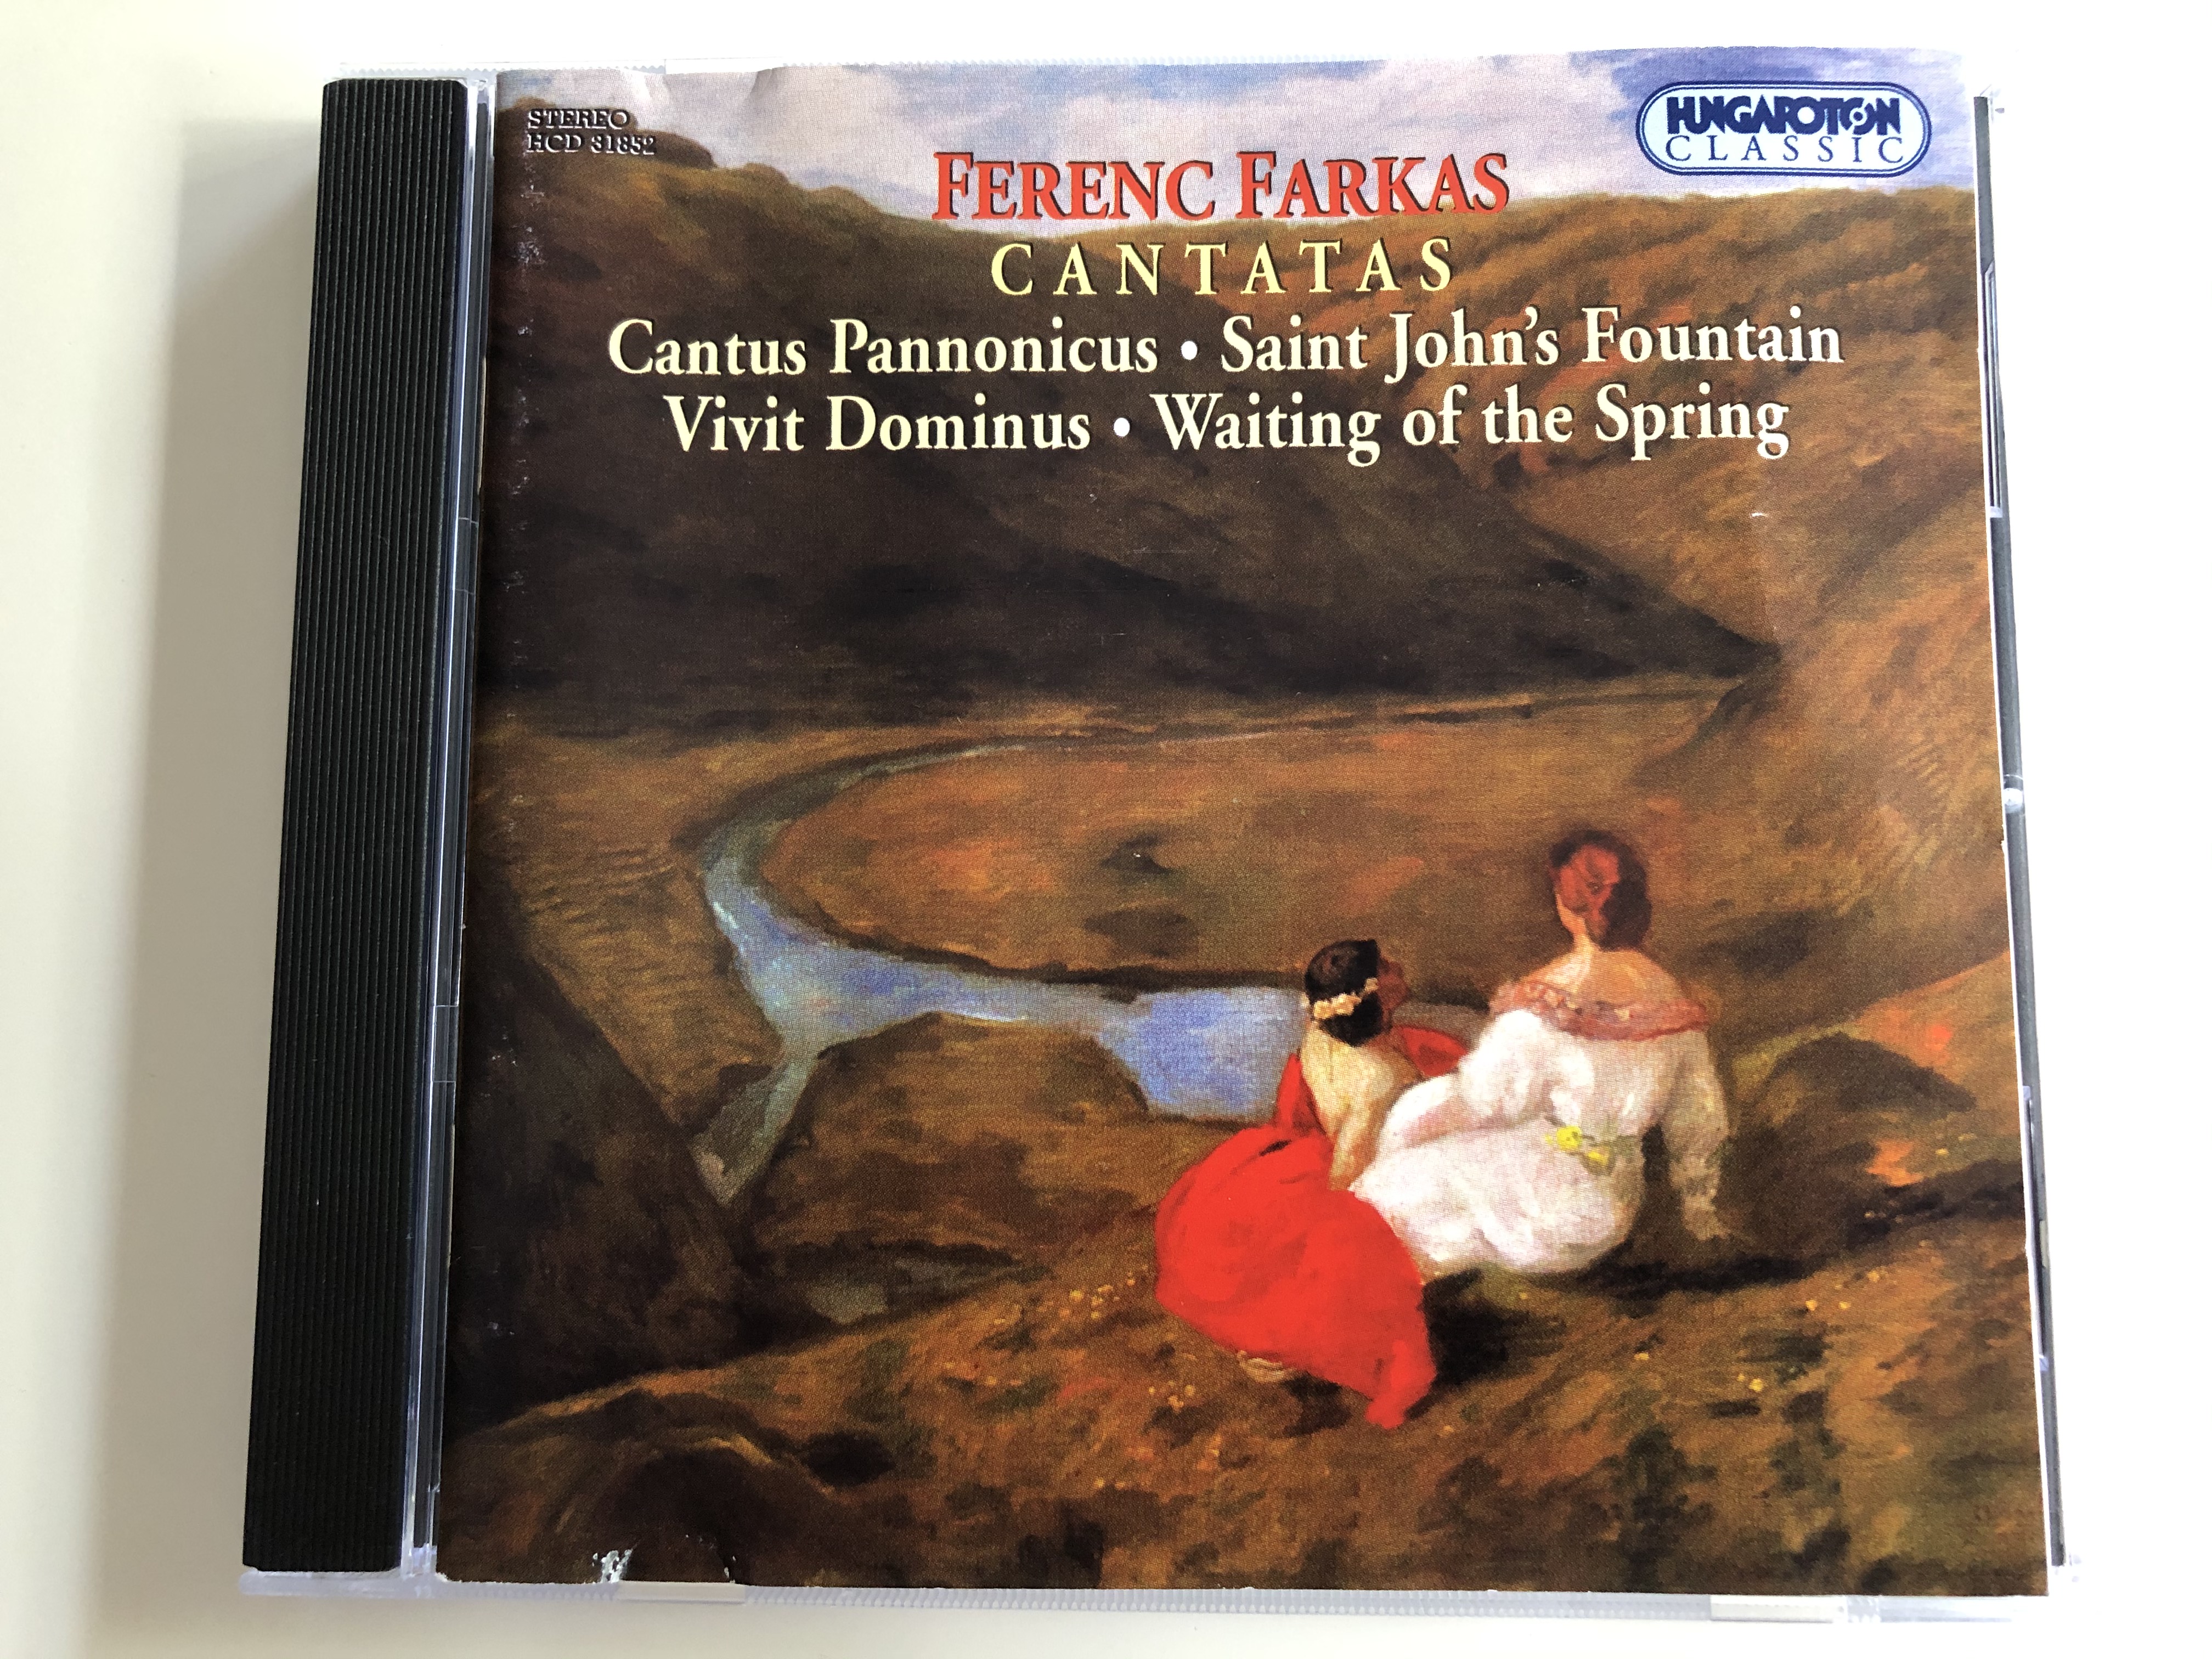 ferenc-farkas-cantatas-cantus-pannonicus-saint-john-s-fountain-vivit-dominus-waiting-of-the-spring-hungaroton-classic-audio-cd-1999-stereo-hcd-31852-1-.jpg